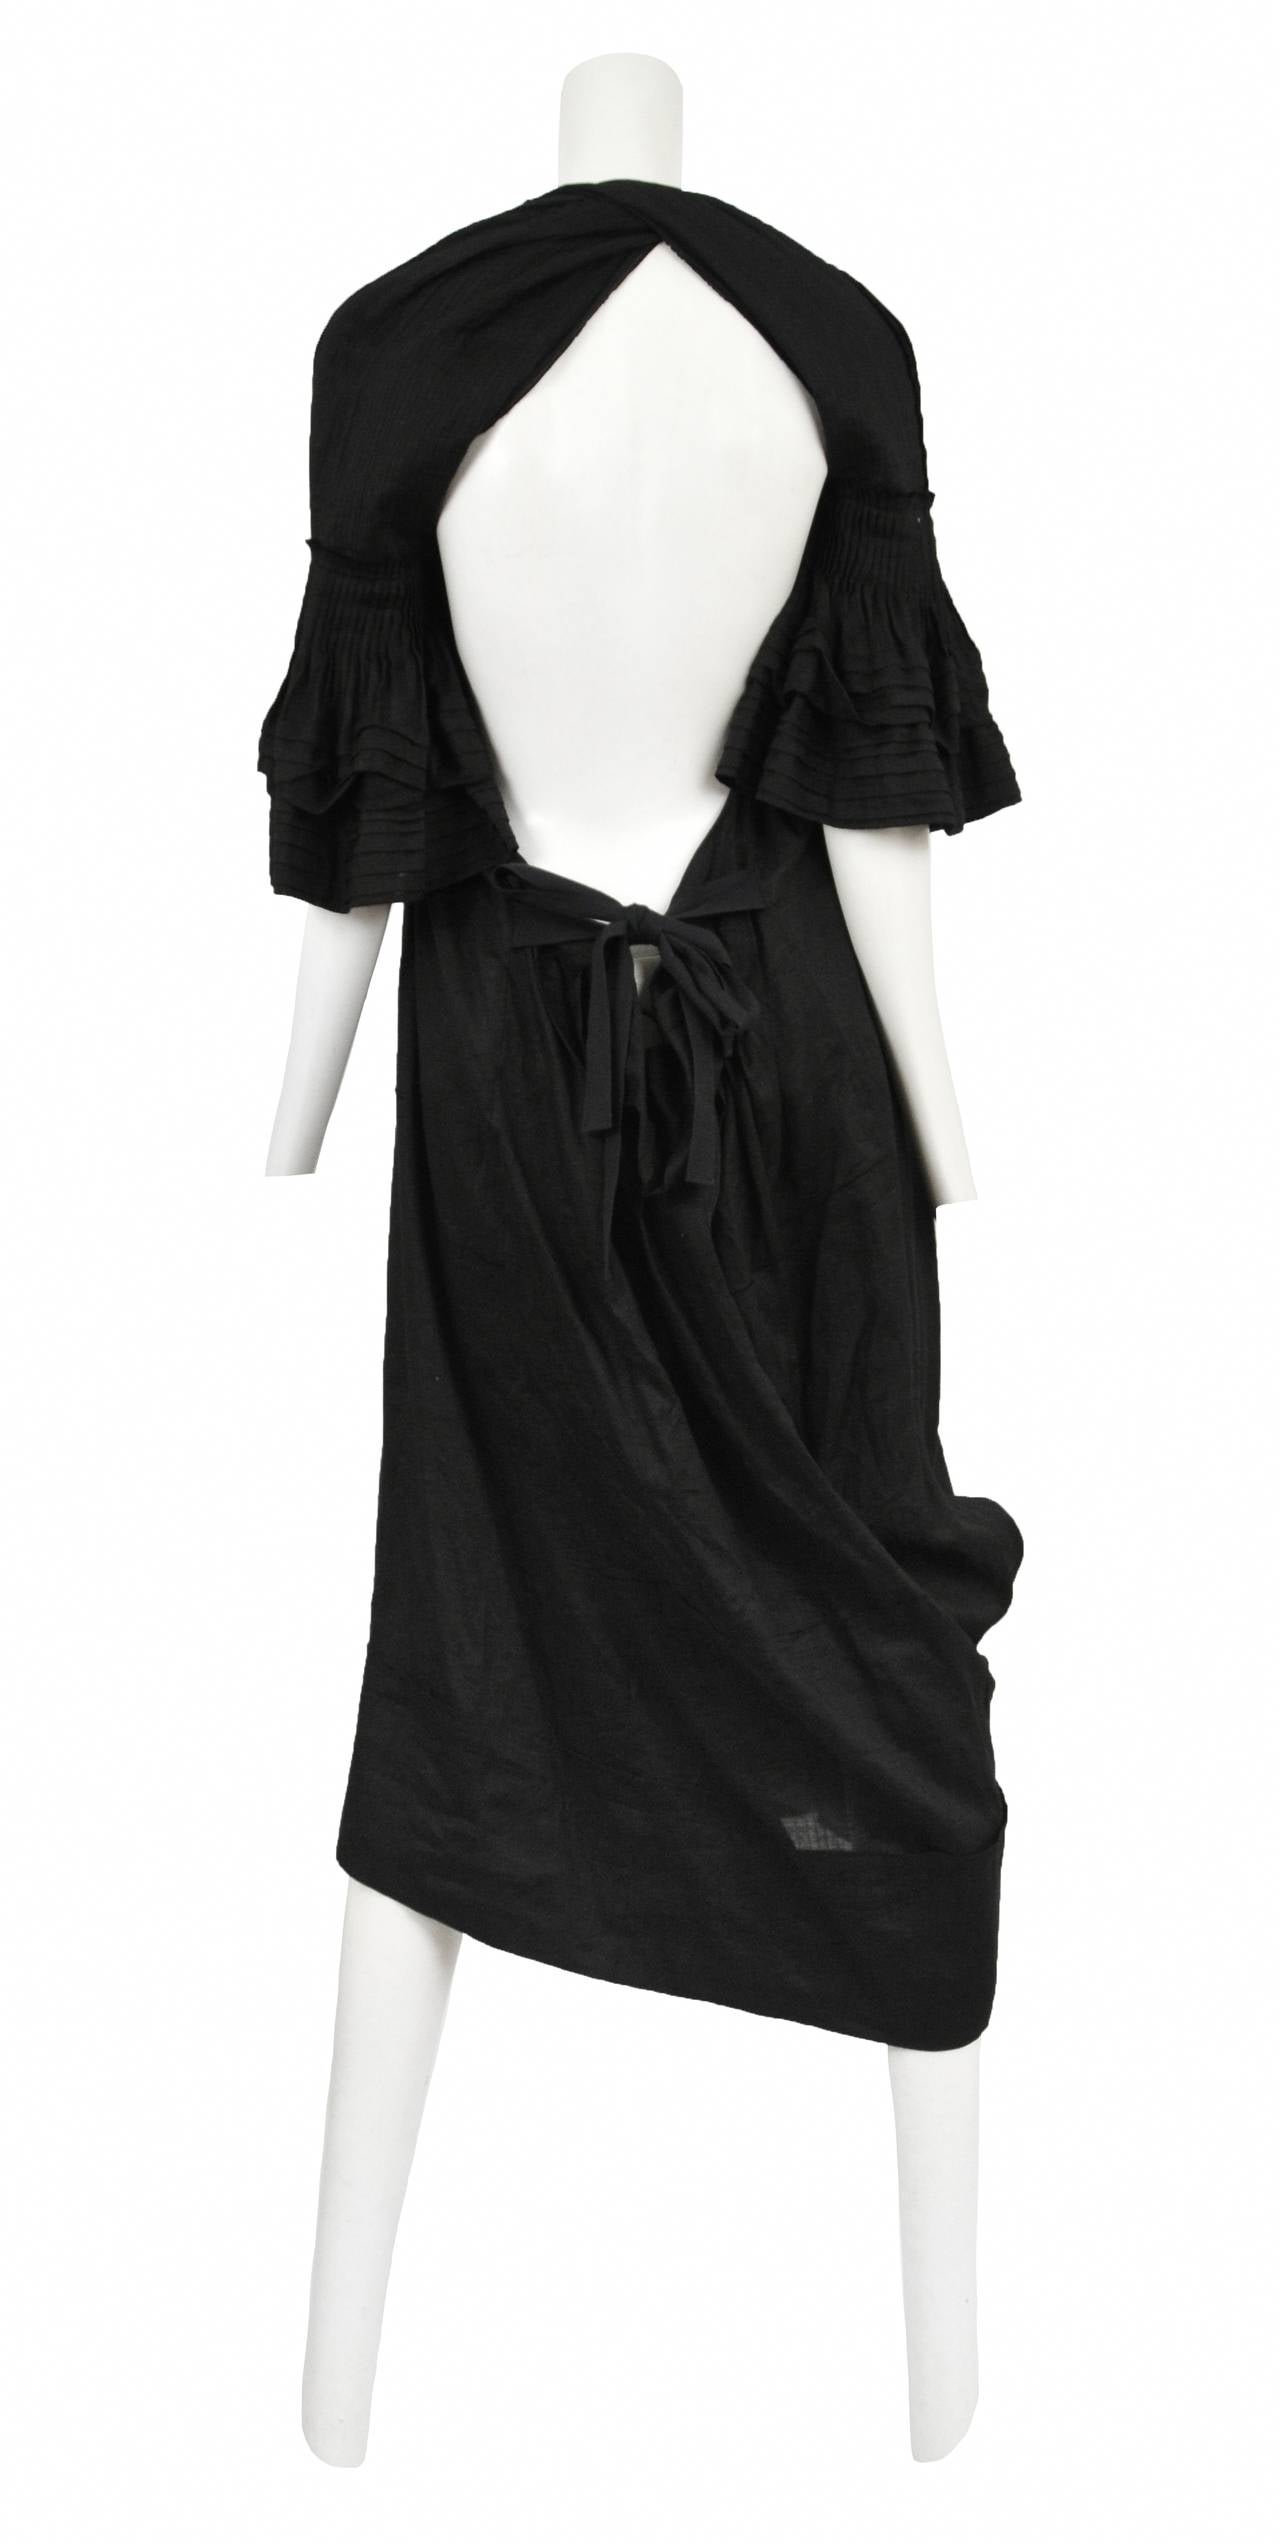 Vintage Tao for Comme des Garcons black linen blend cropped jumpsuit with front panel bow detail & attached waist tie closure. Circa 2007.